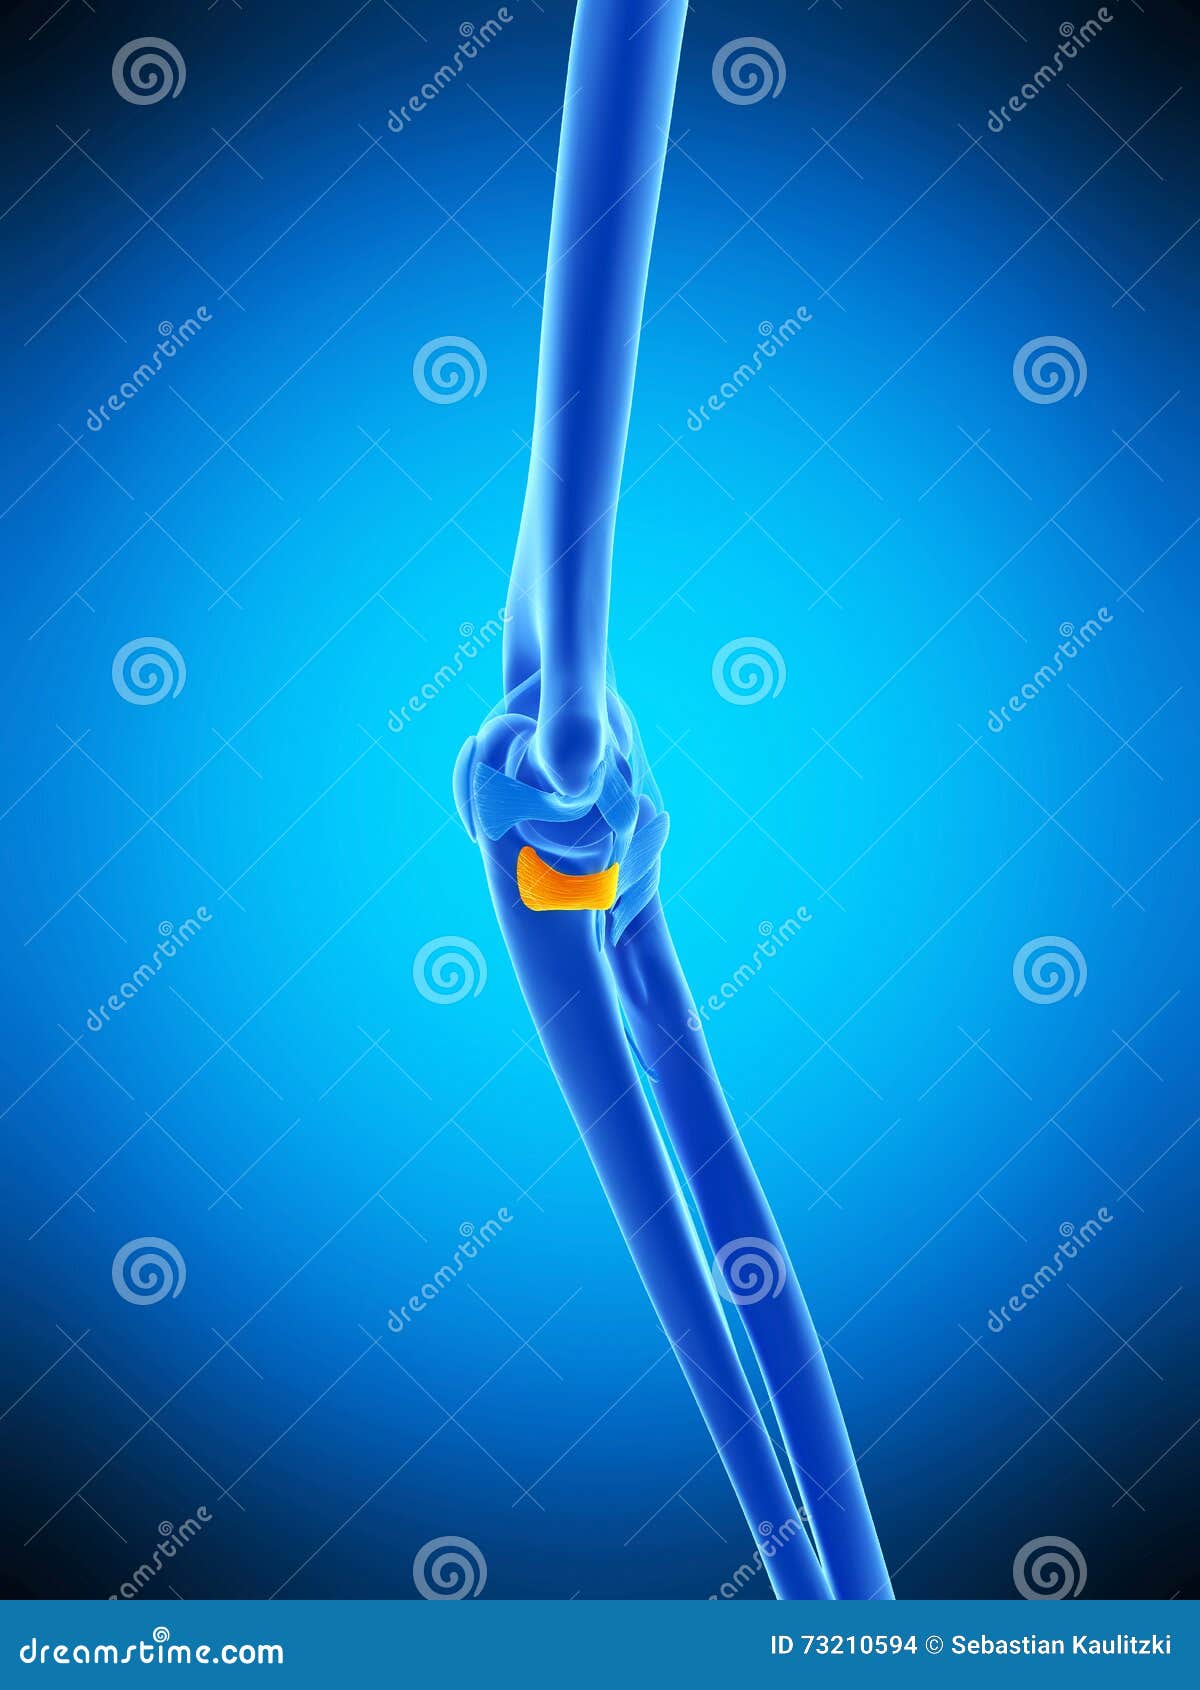 the oblique bandetral ligament